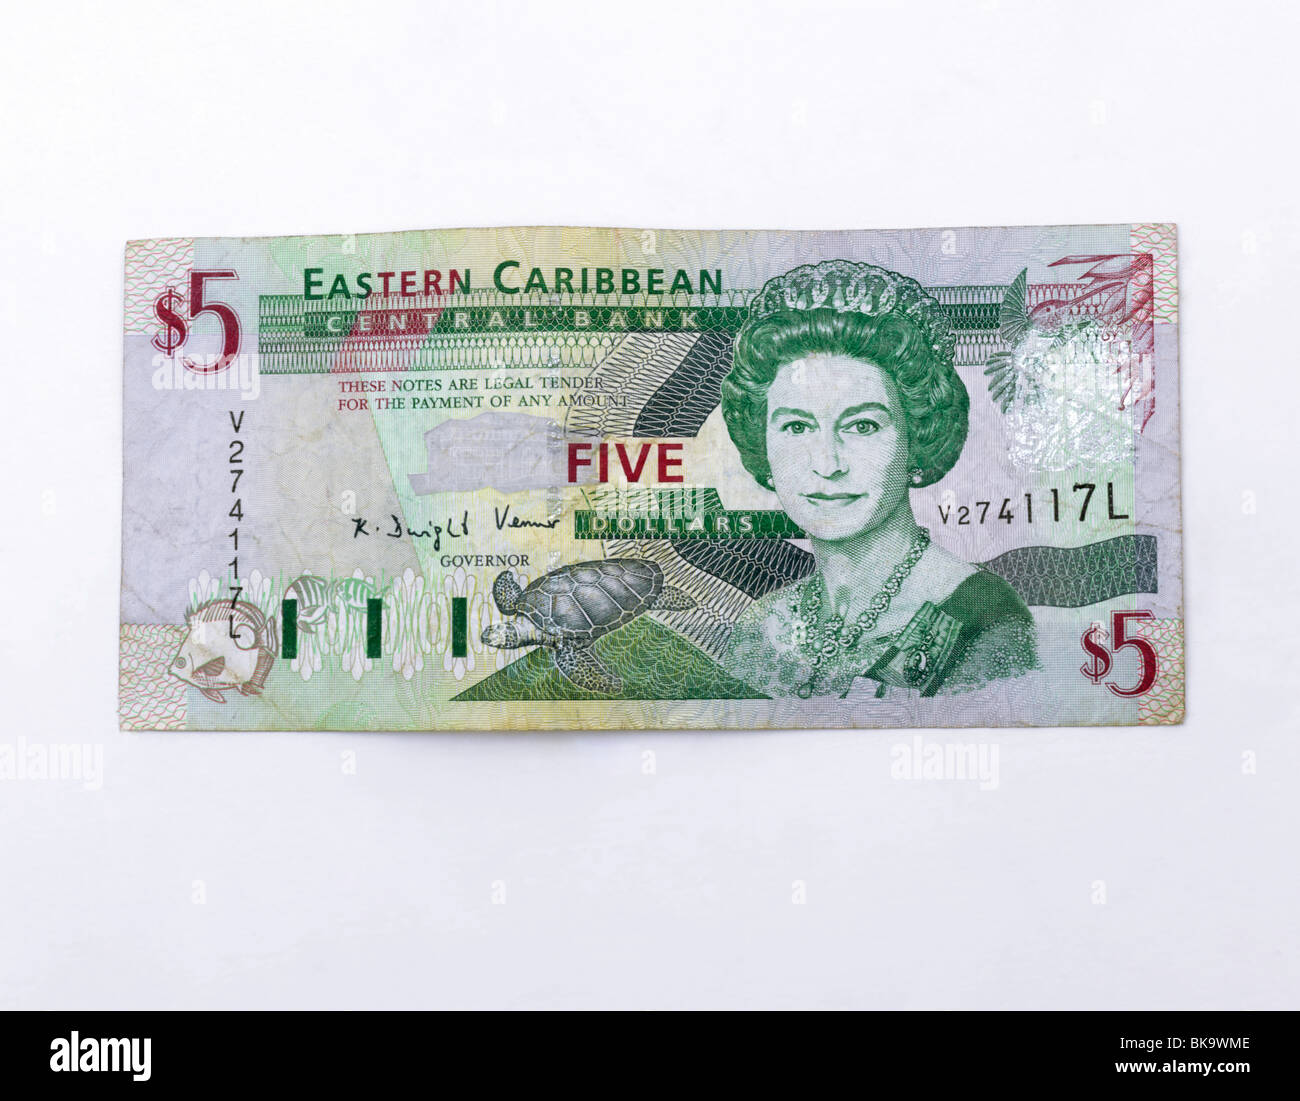 Östliche Karibik Banknote 5 Dollar Stockfoto